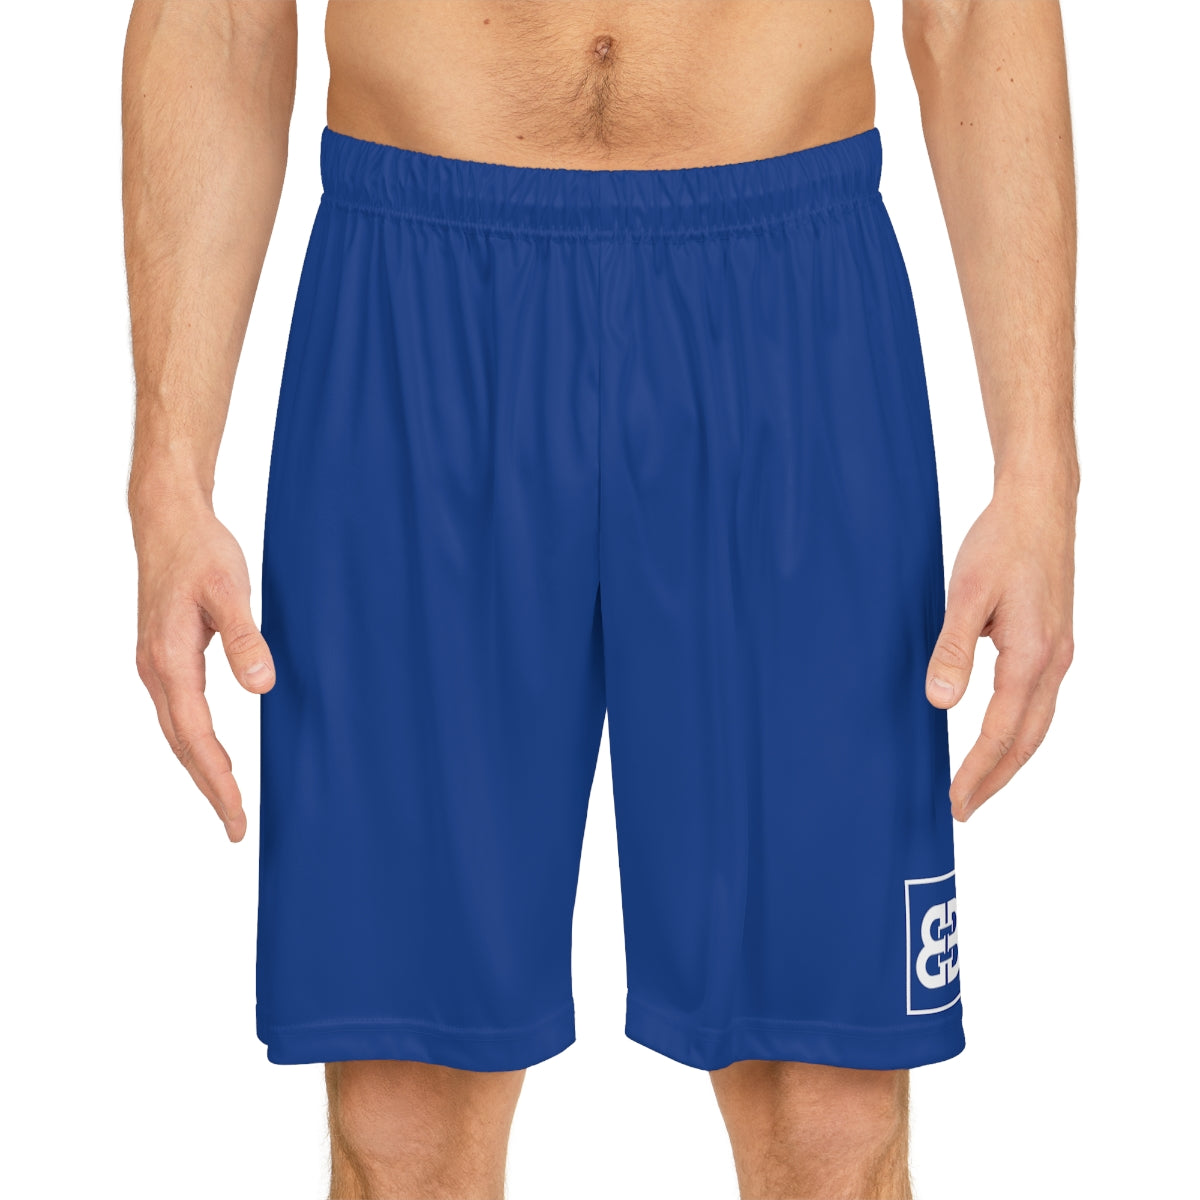 Battle Box BB Blue Basketball Shorts